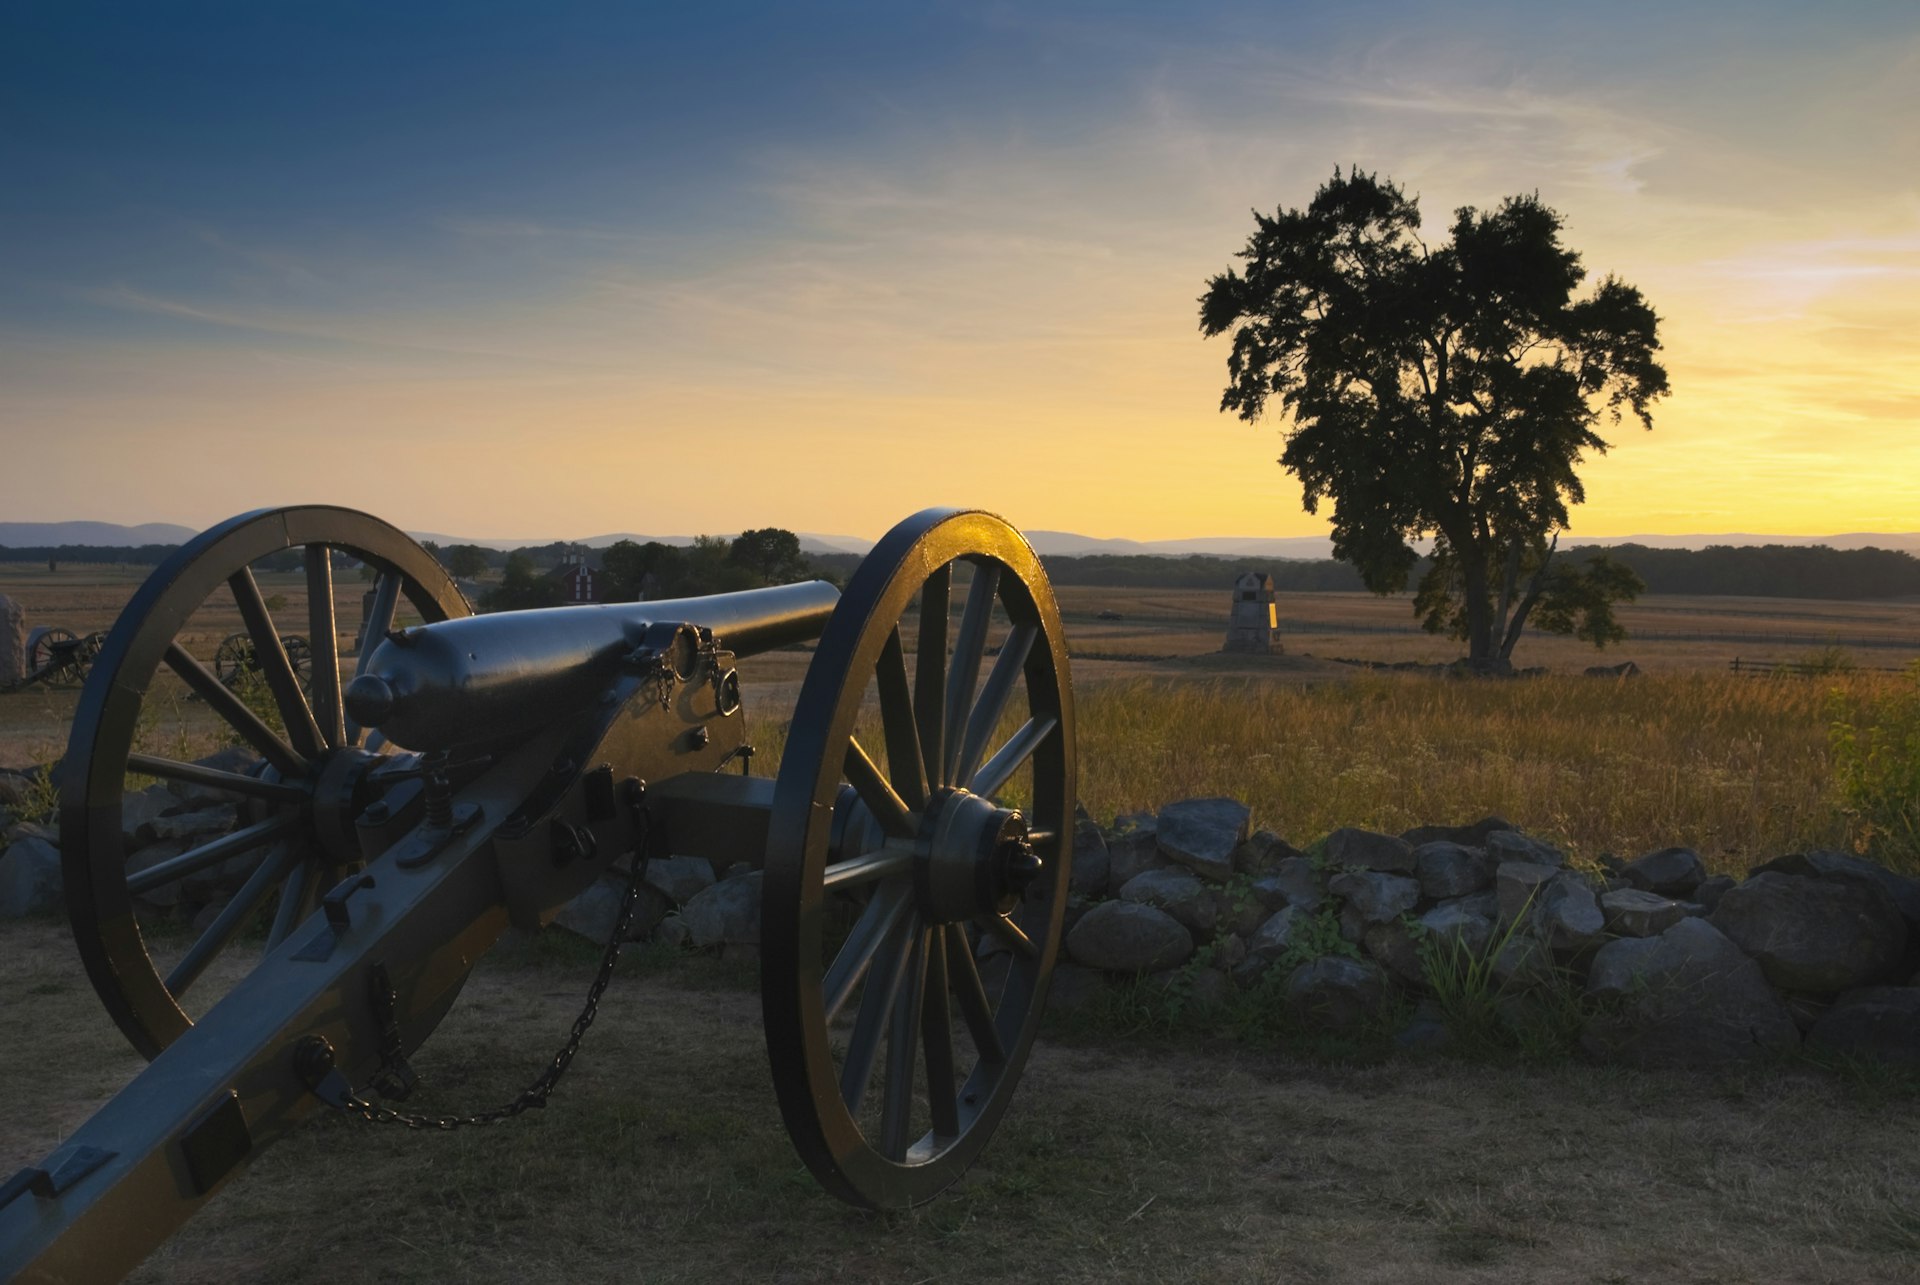 A cannon at Gettysburg Battlefield in Pennsylvania